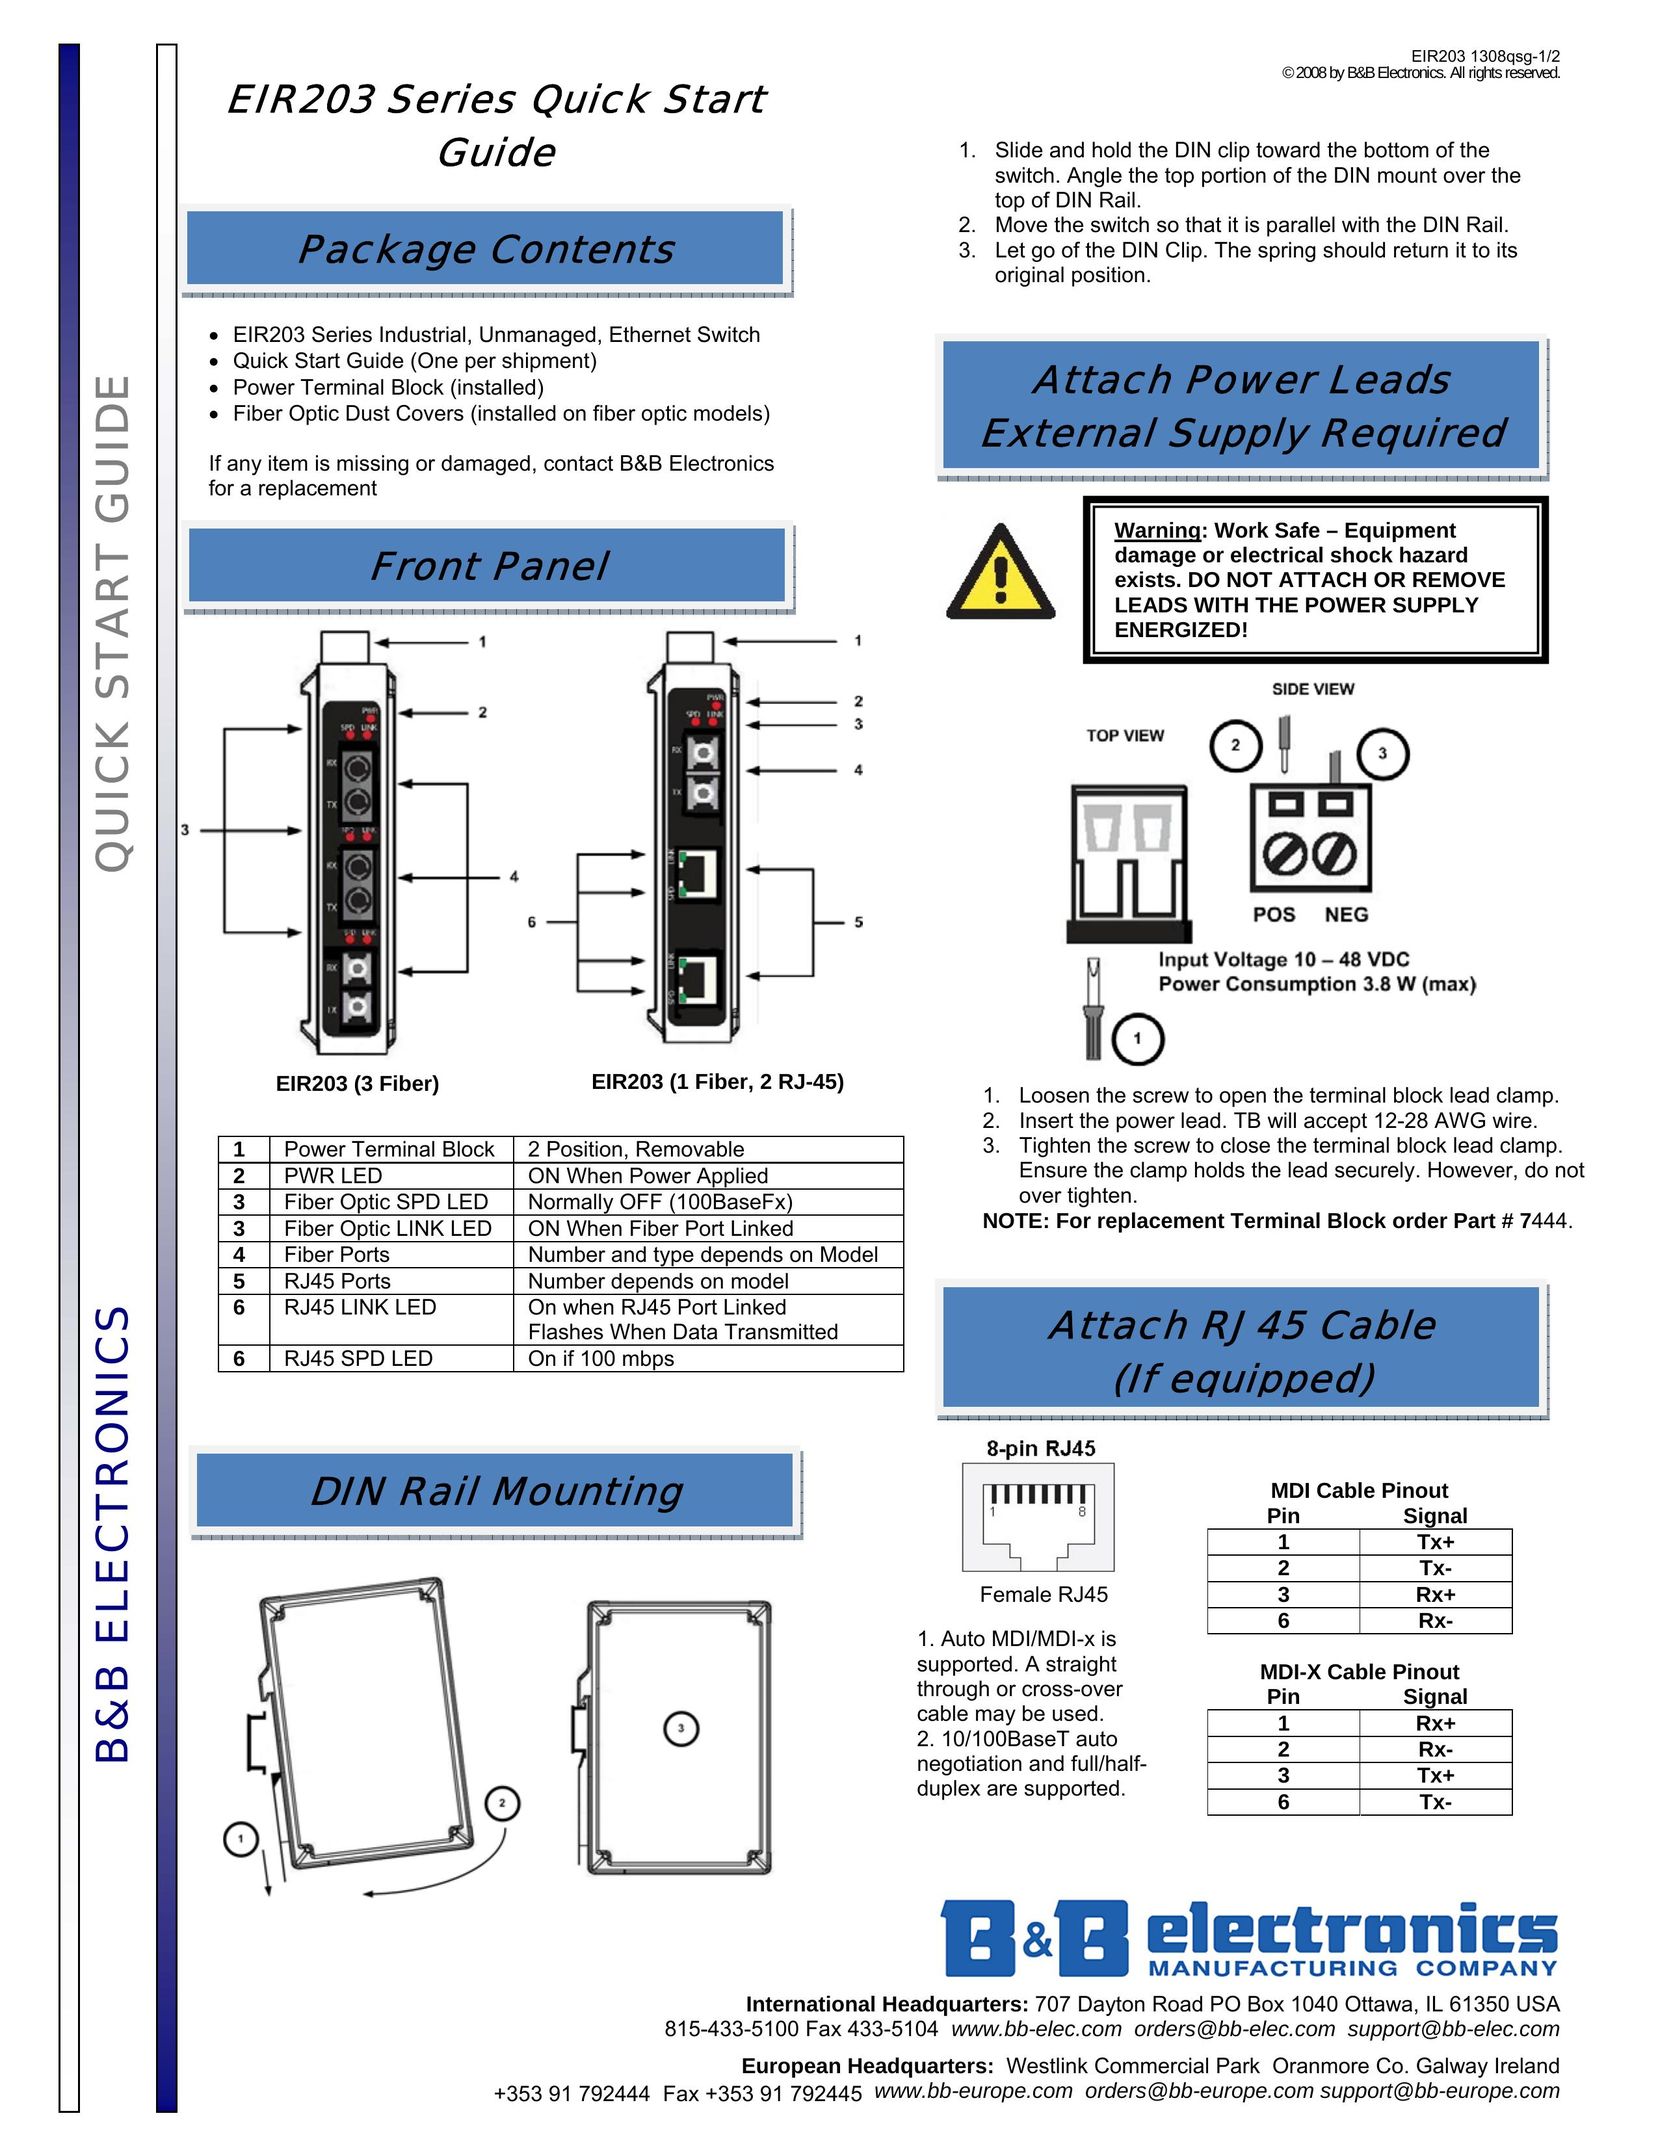 B&B Electronics EIR203-3MC Network Card User Manual